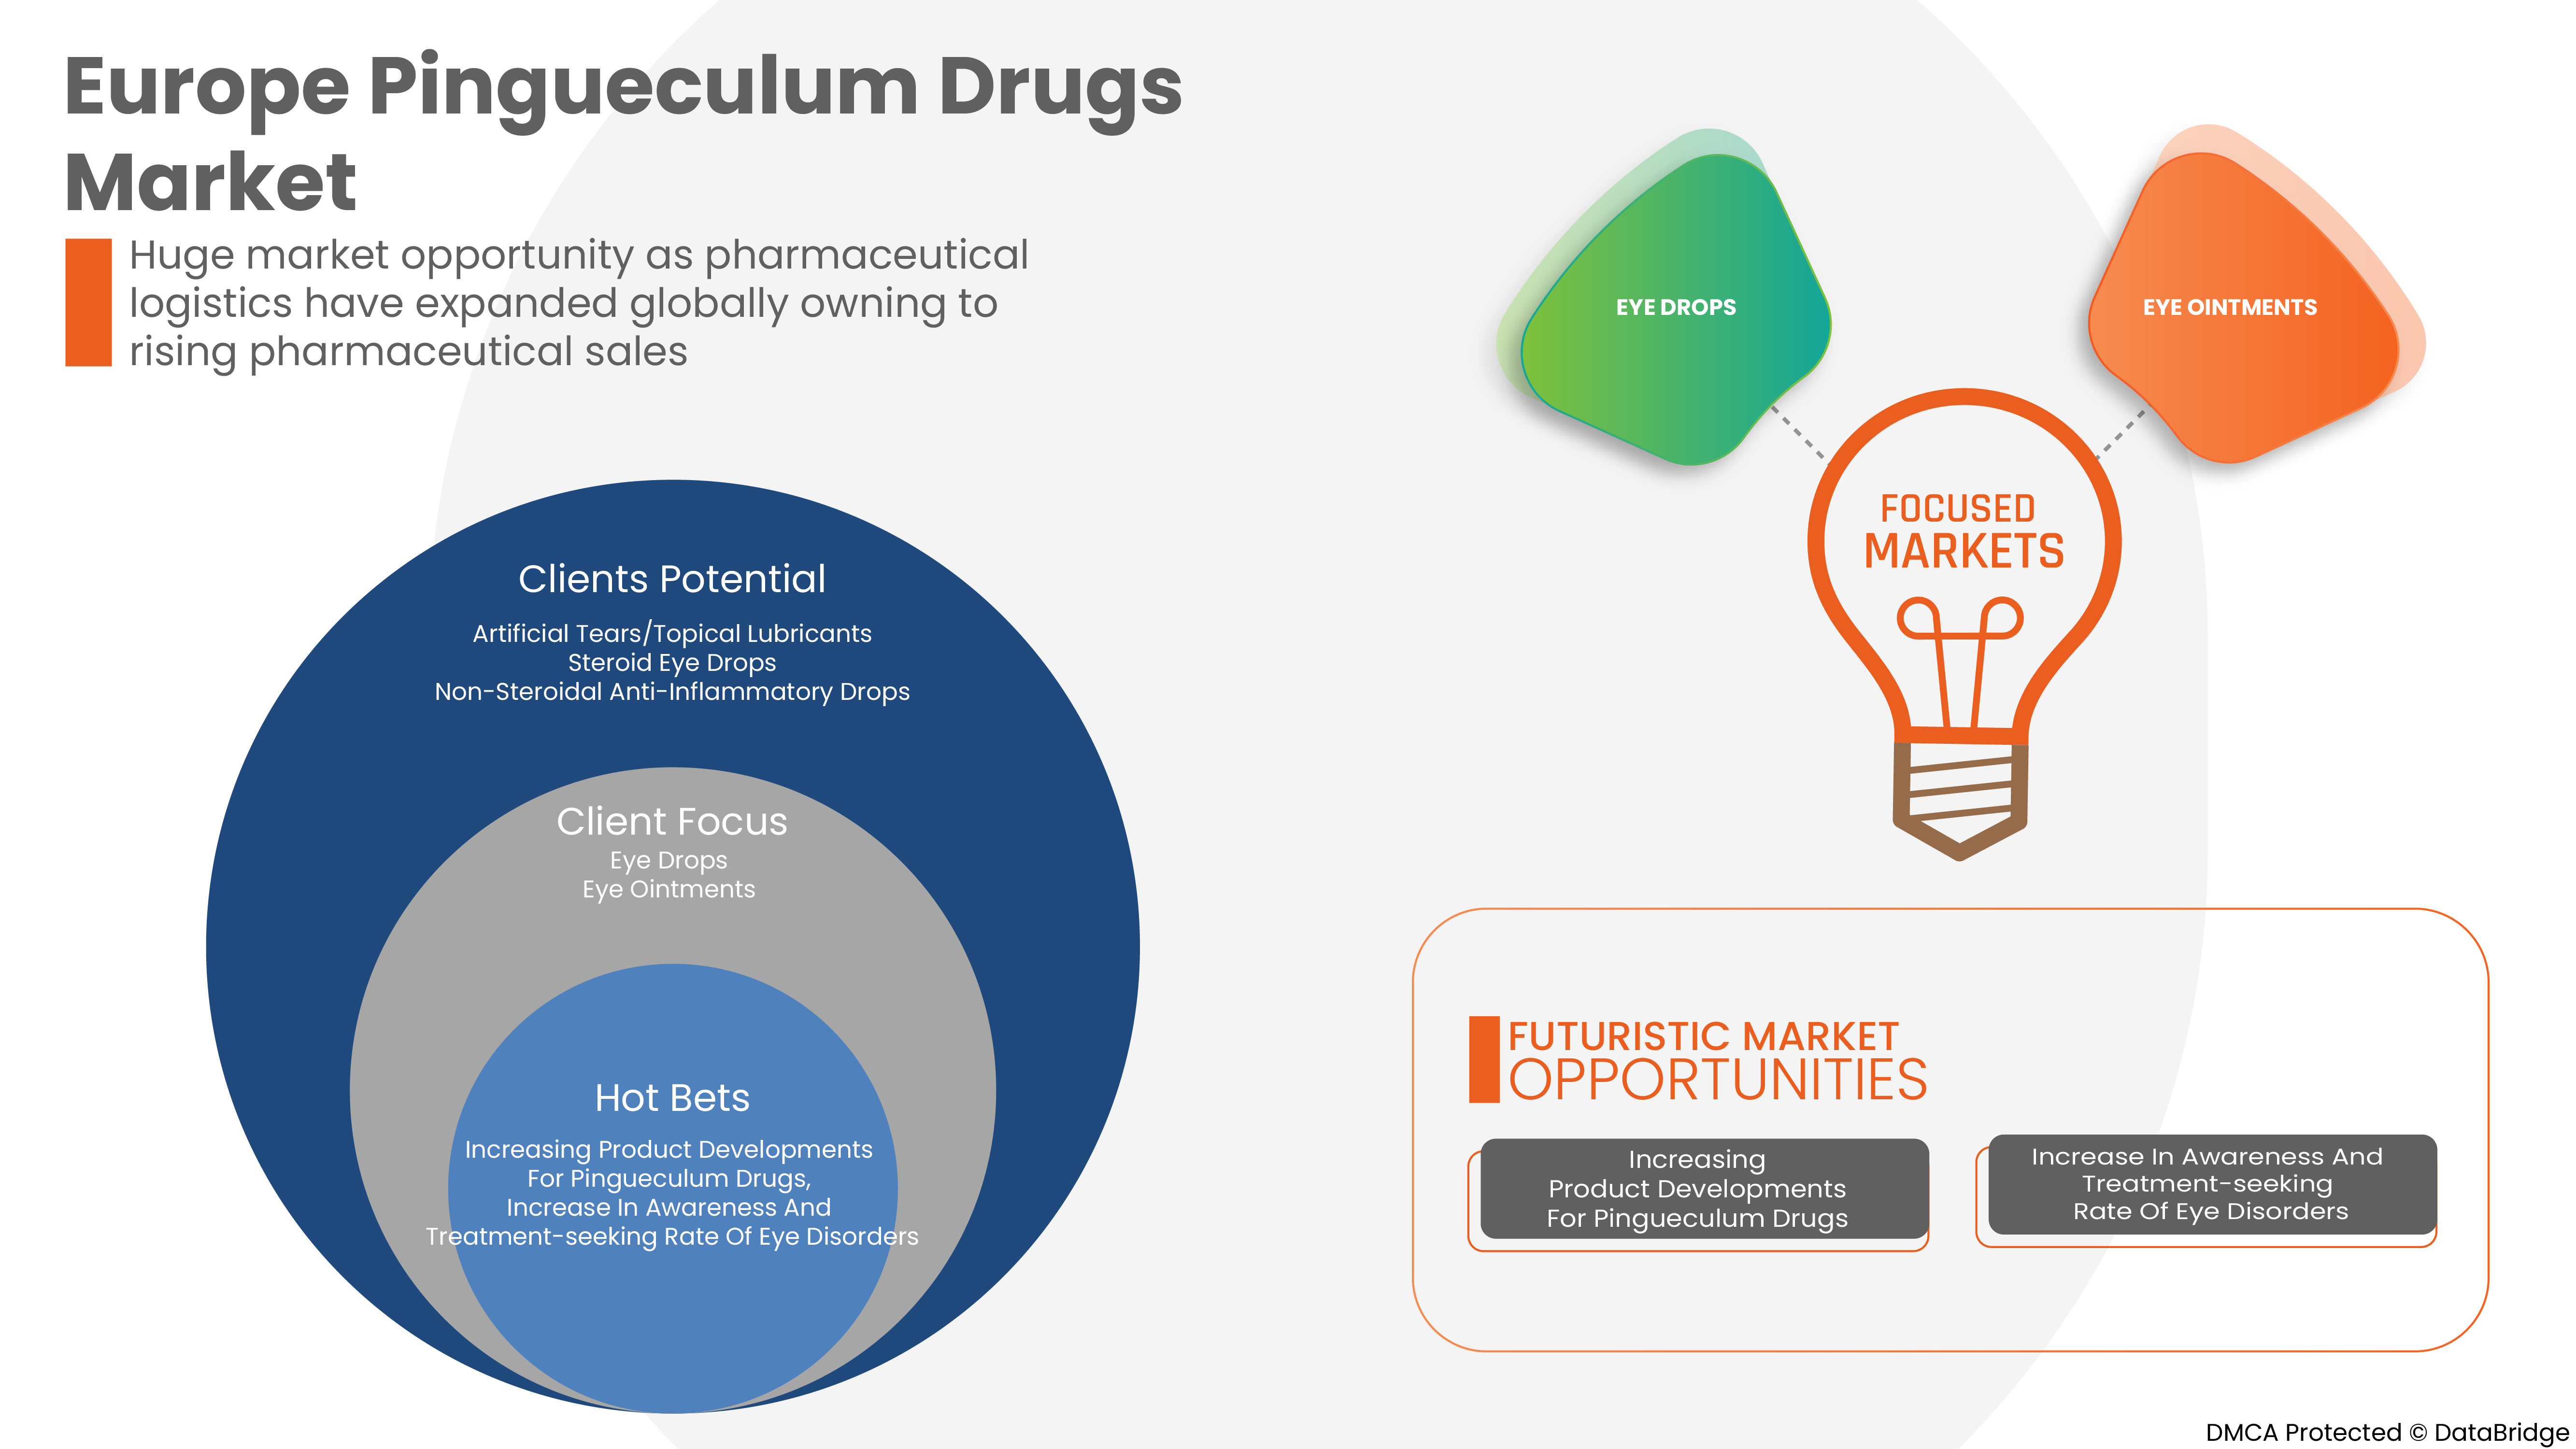 Europe Pingueculum Drugs Market